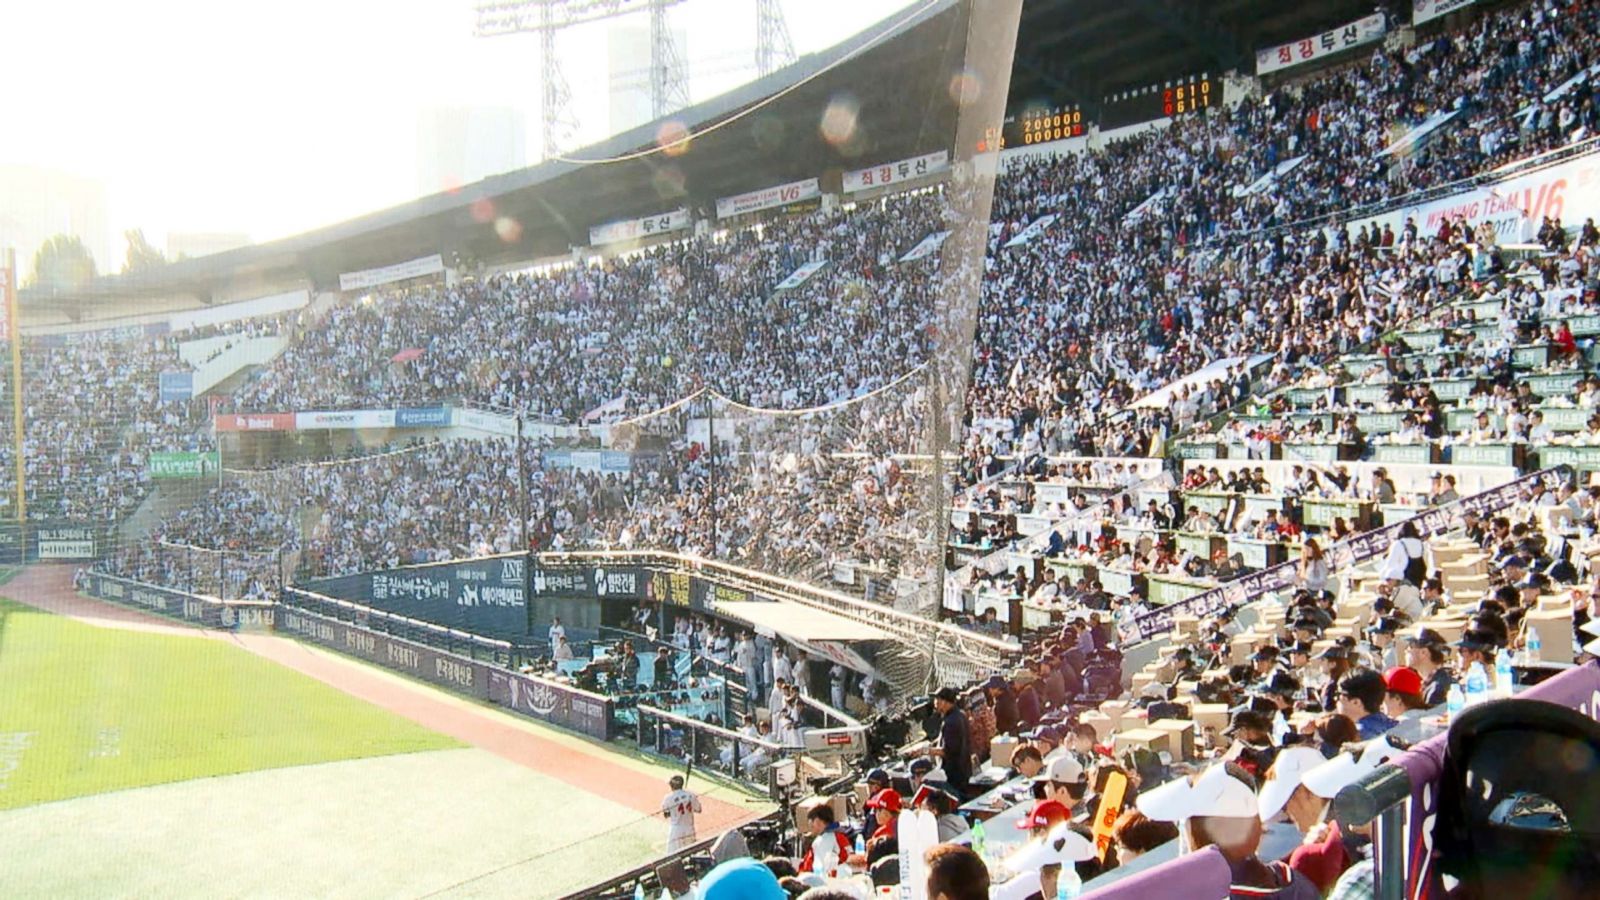 A look inside South Korean baseballs elaborate cheer culture